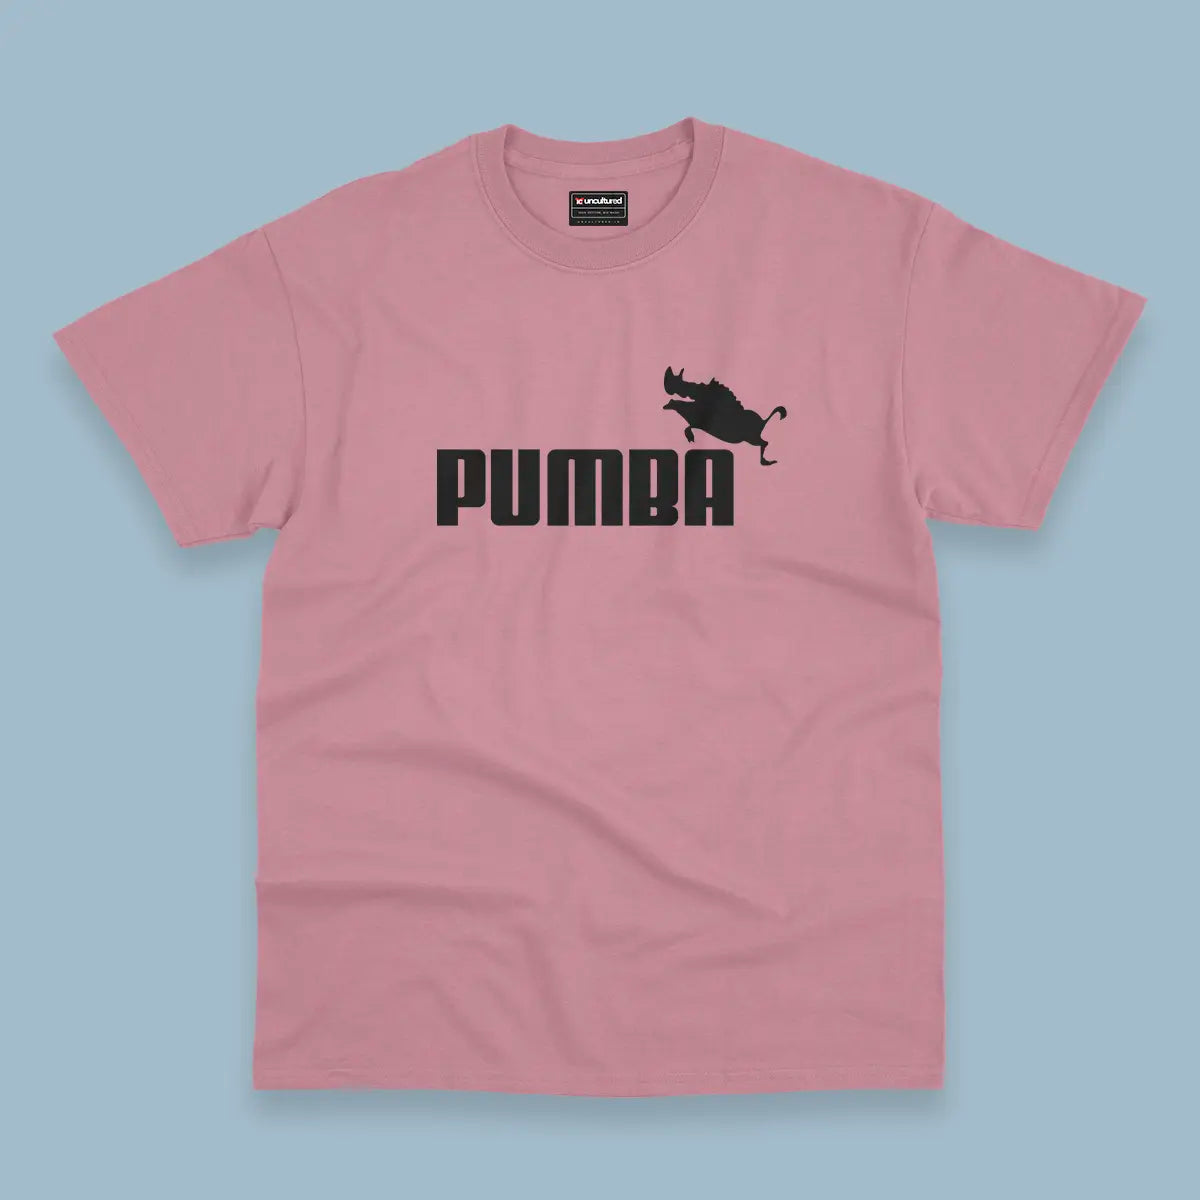 Pumba - Oversized